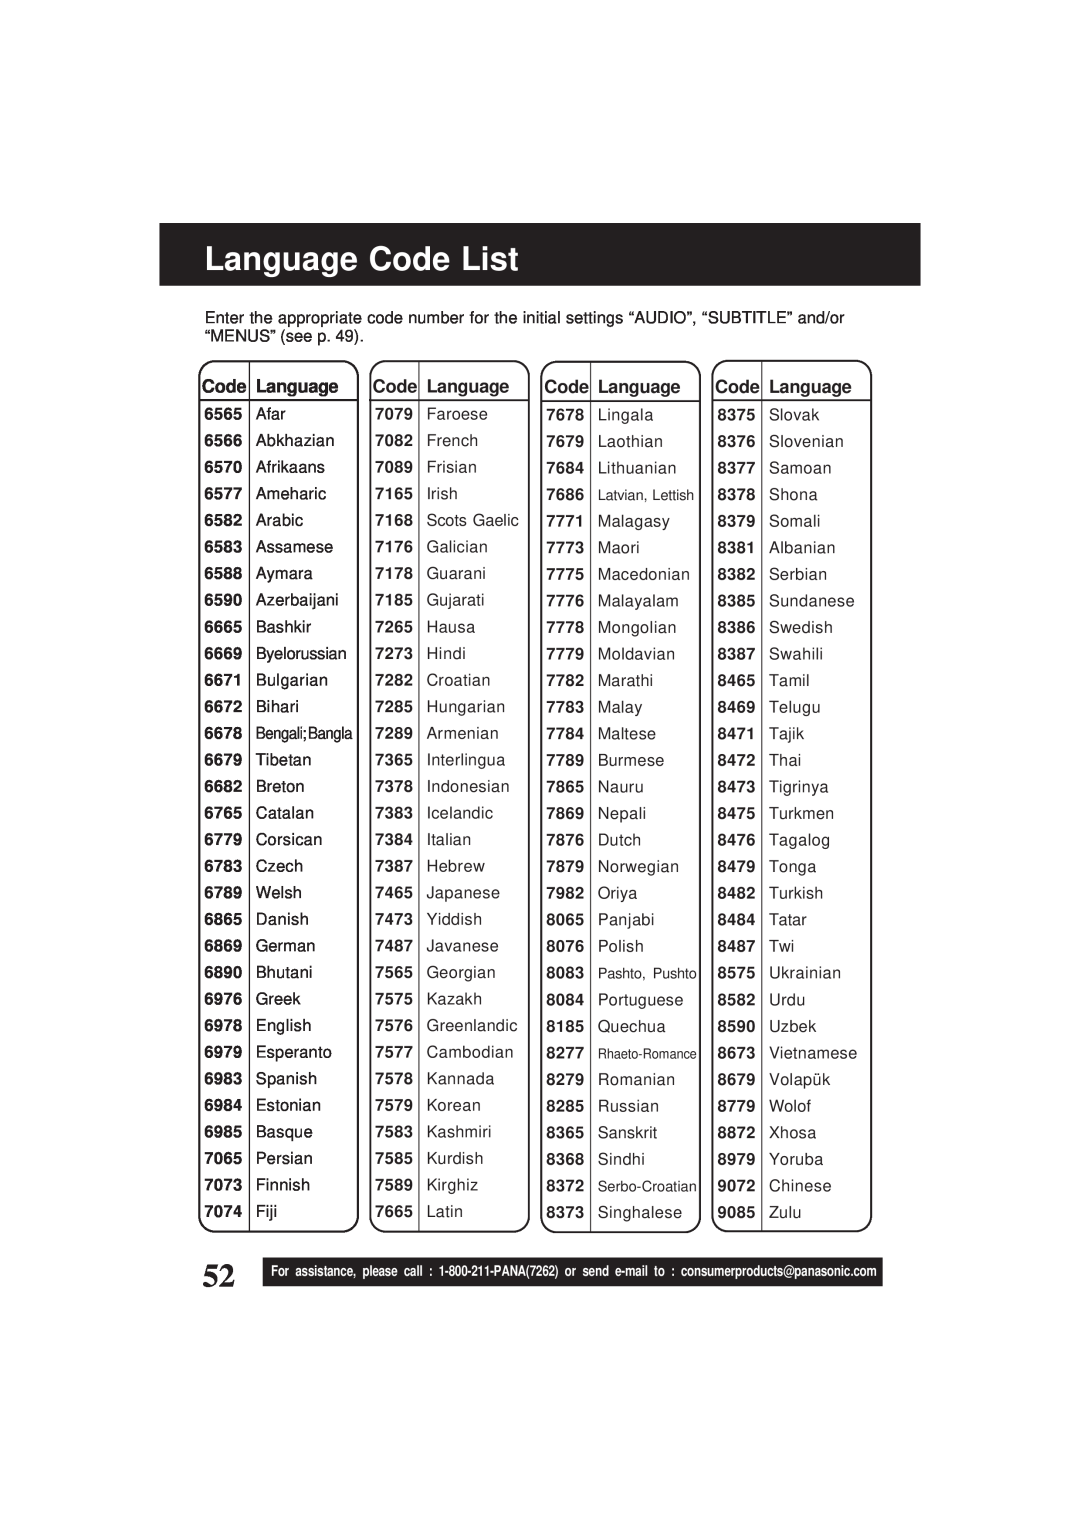 Panasonic PV-D4761 Language Code List, 7079, 7082, 7089, 7165, 7168, 7176, 7178, 7185, 7265, 7273, 7282, 7285, 7289, 7365 